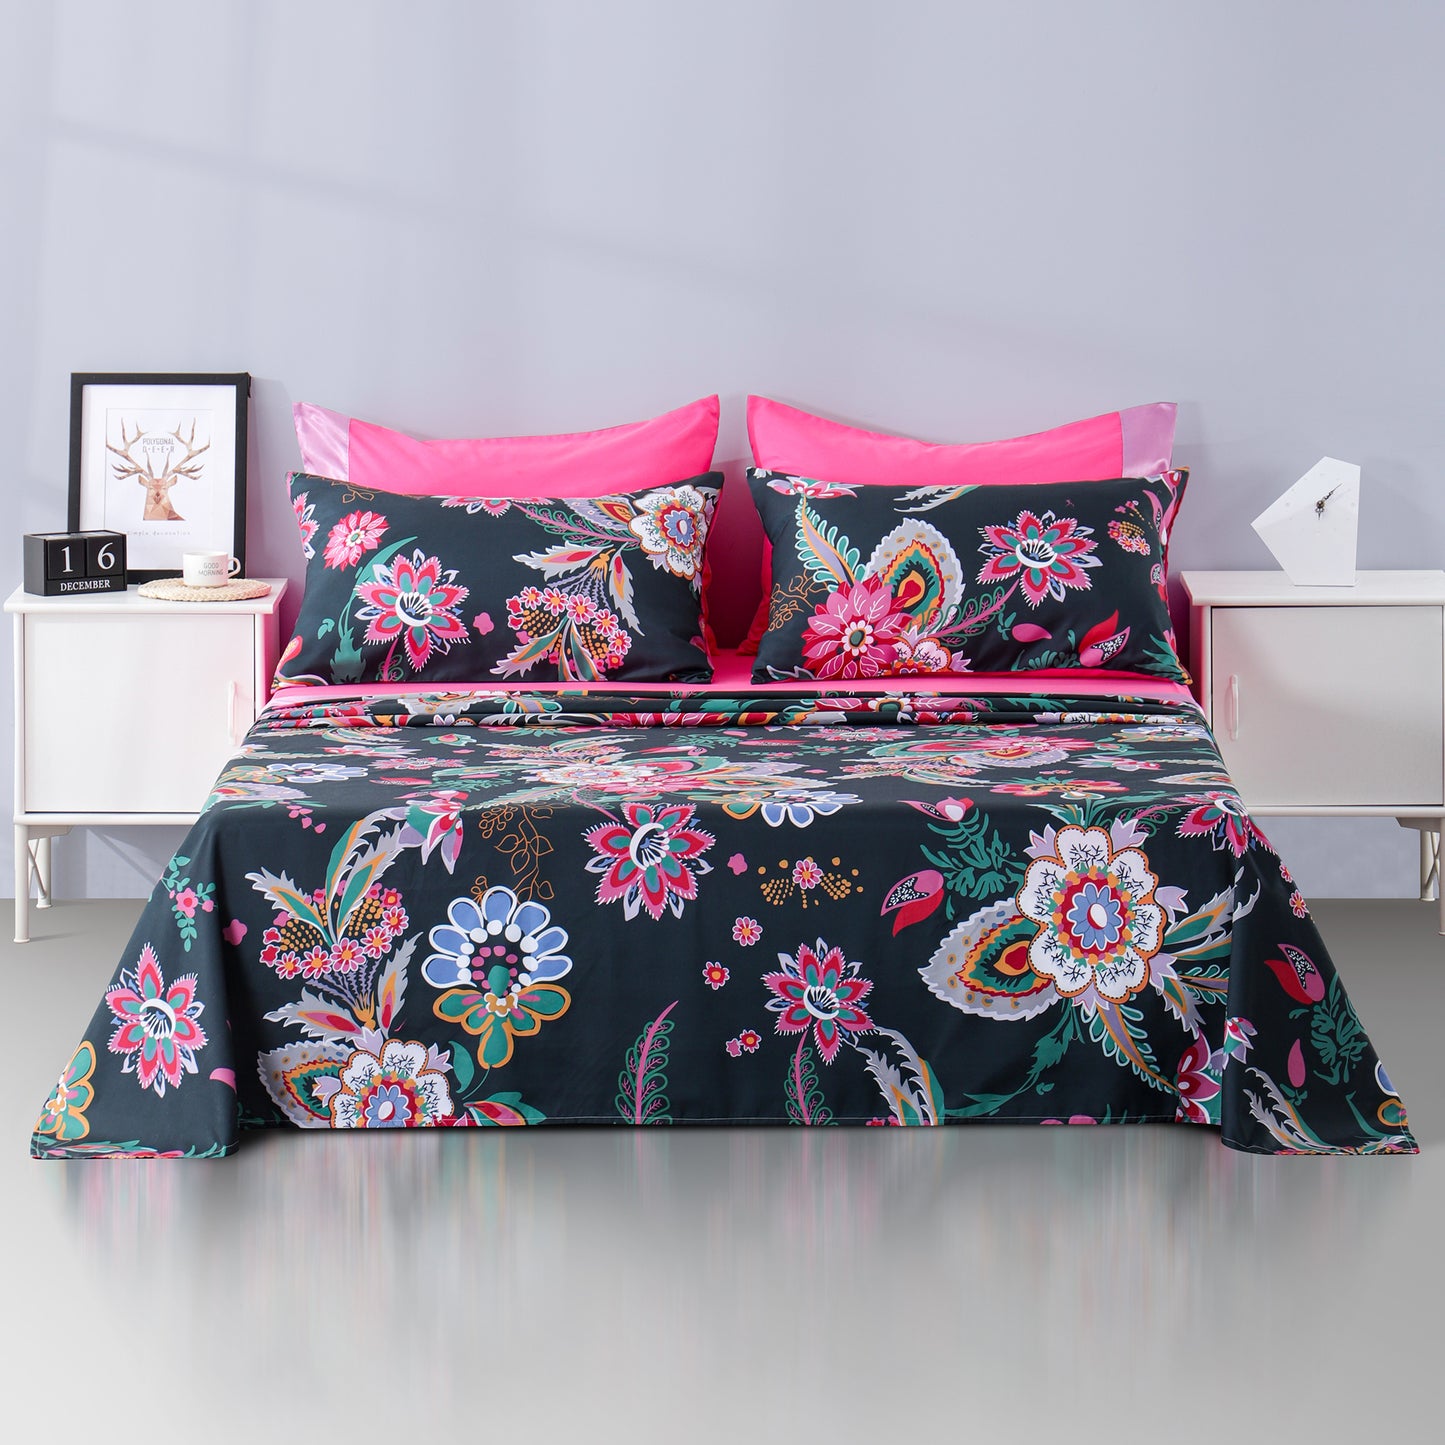 6 Piece Bed Sheet set-Pink floral